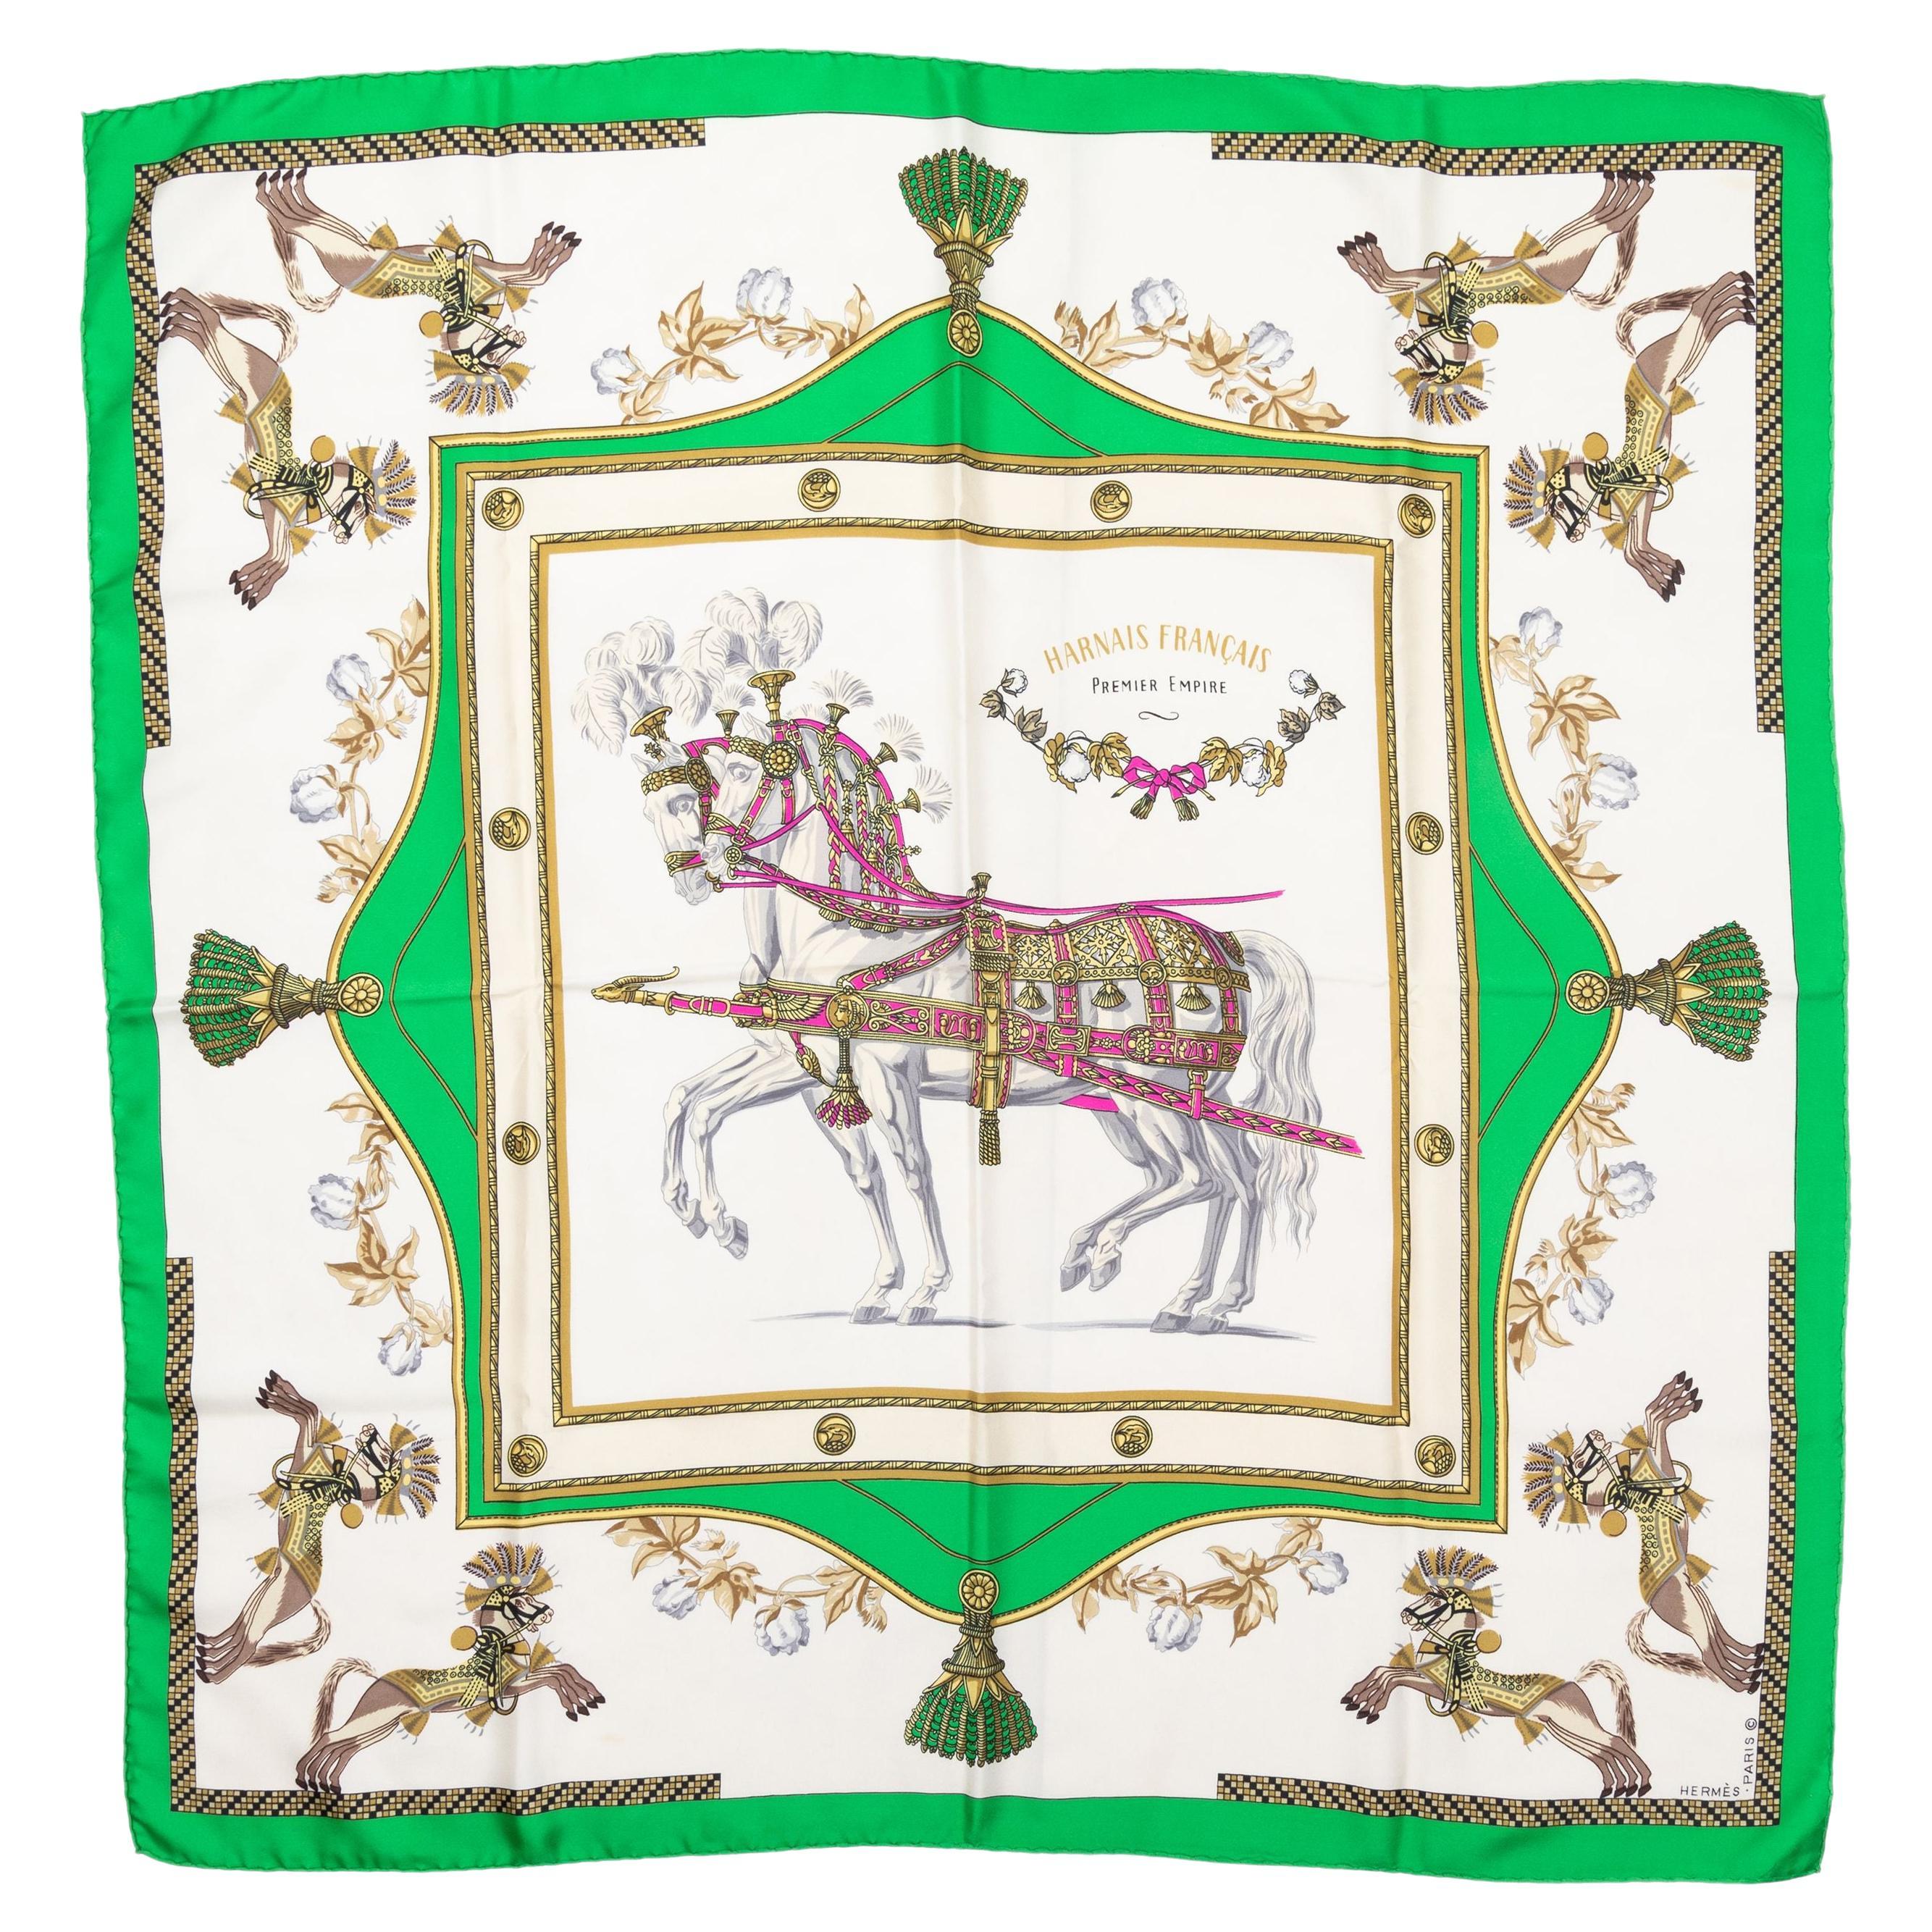 Hermes White & Multicolor Harnais Francais Premier Empire Silk Scarf